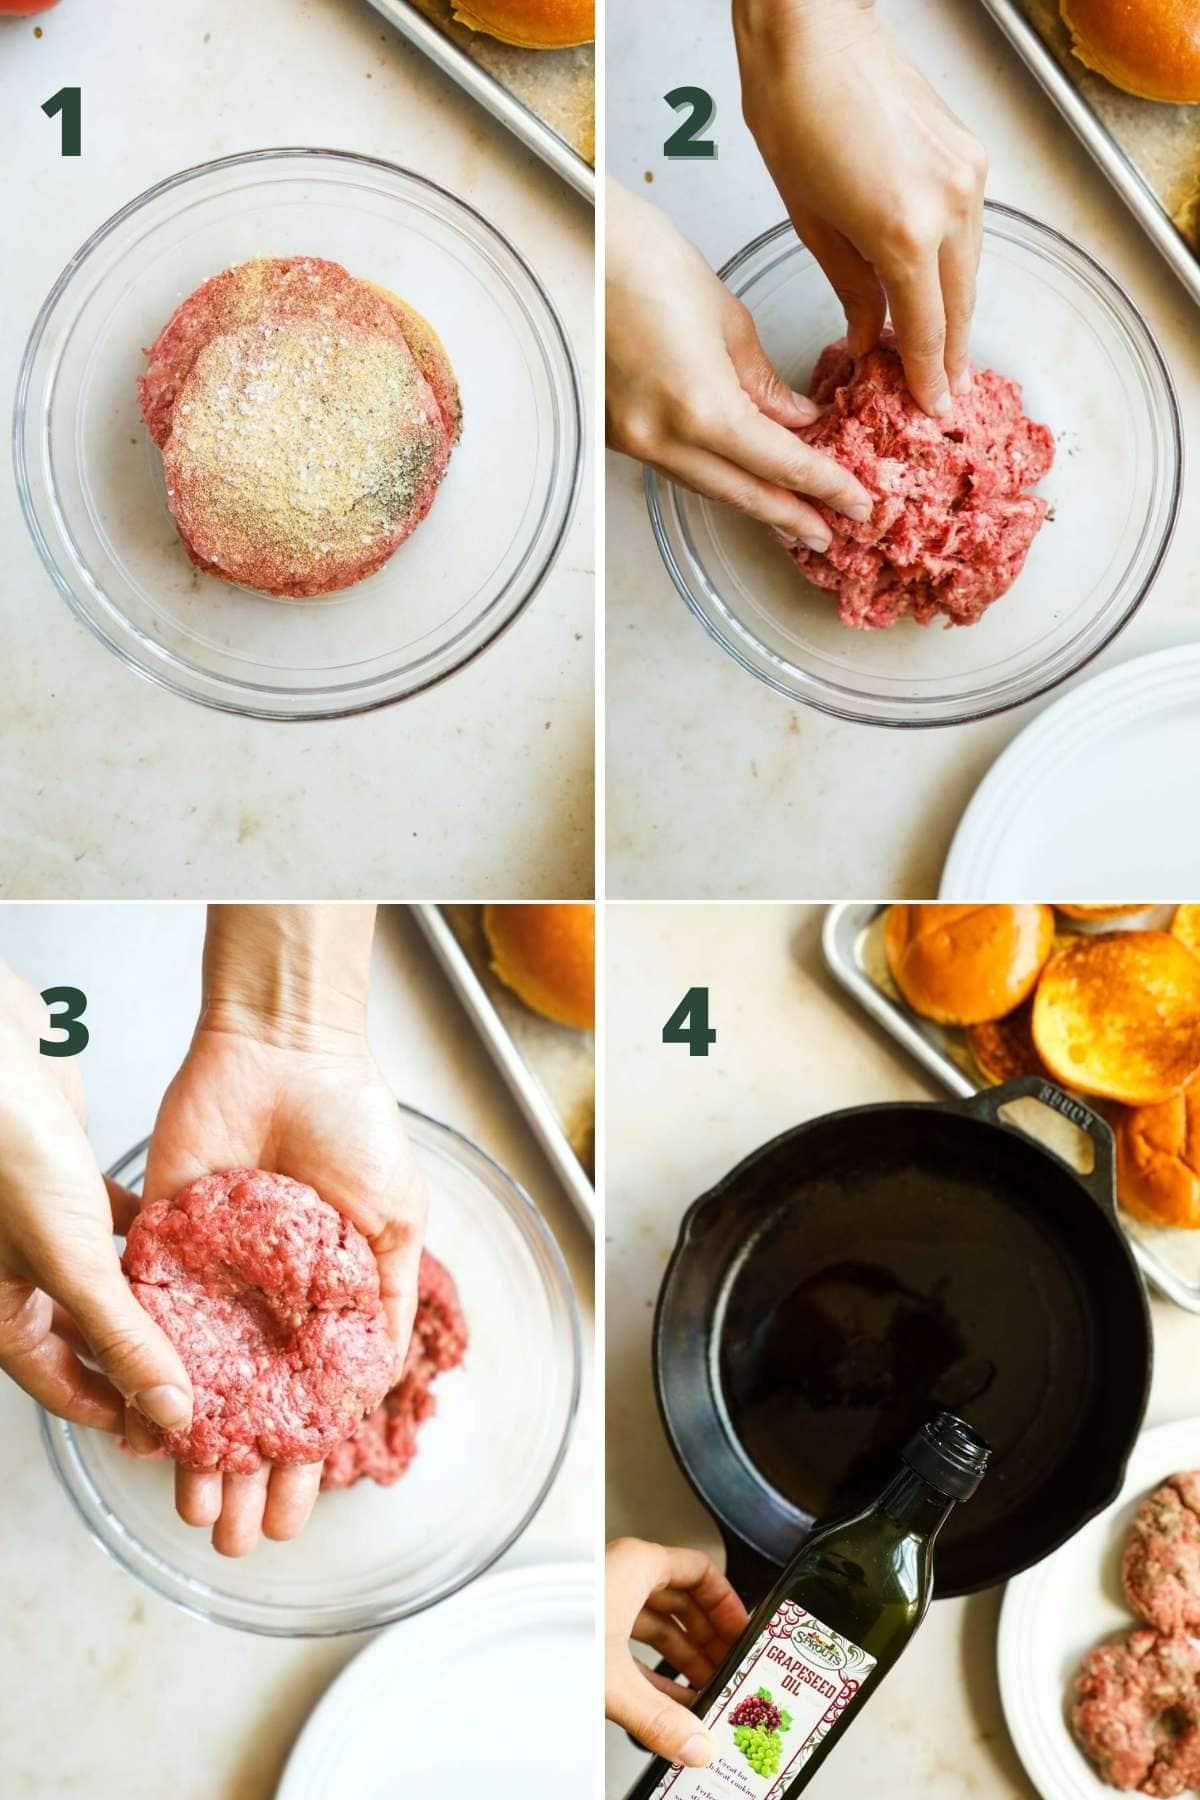 Steps to make cast iron skillet burgers